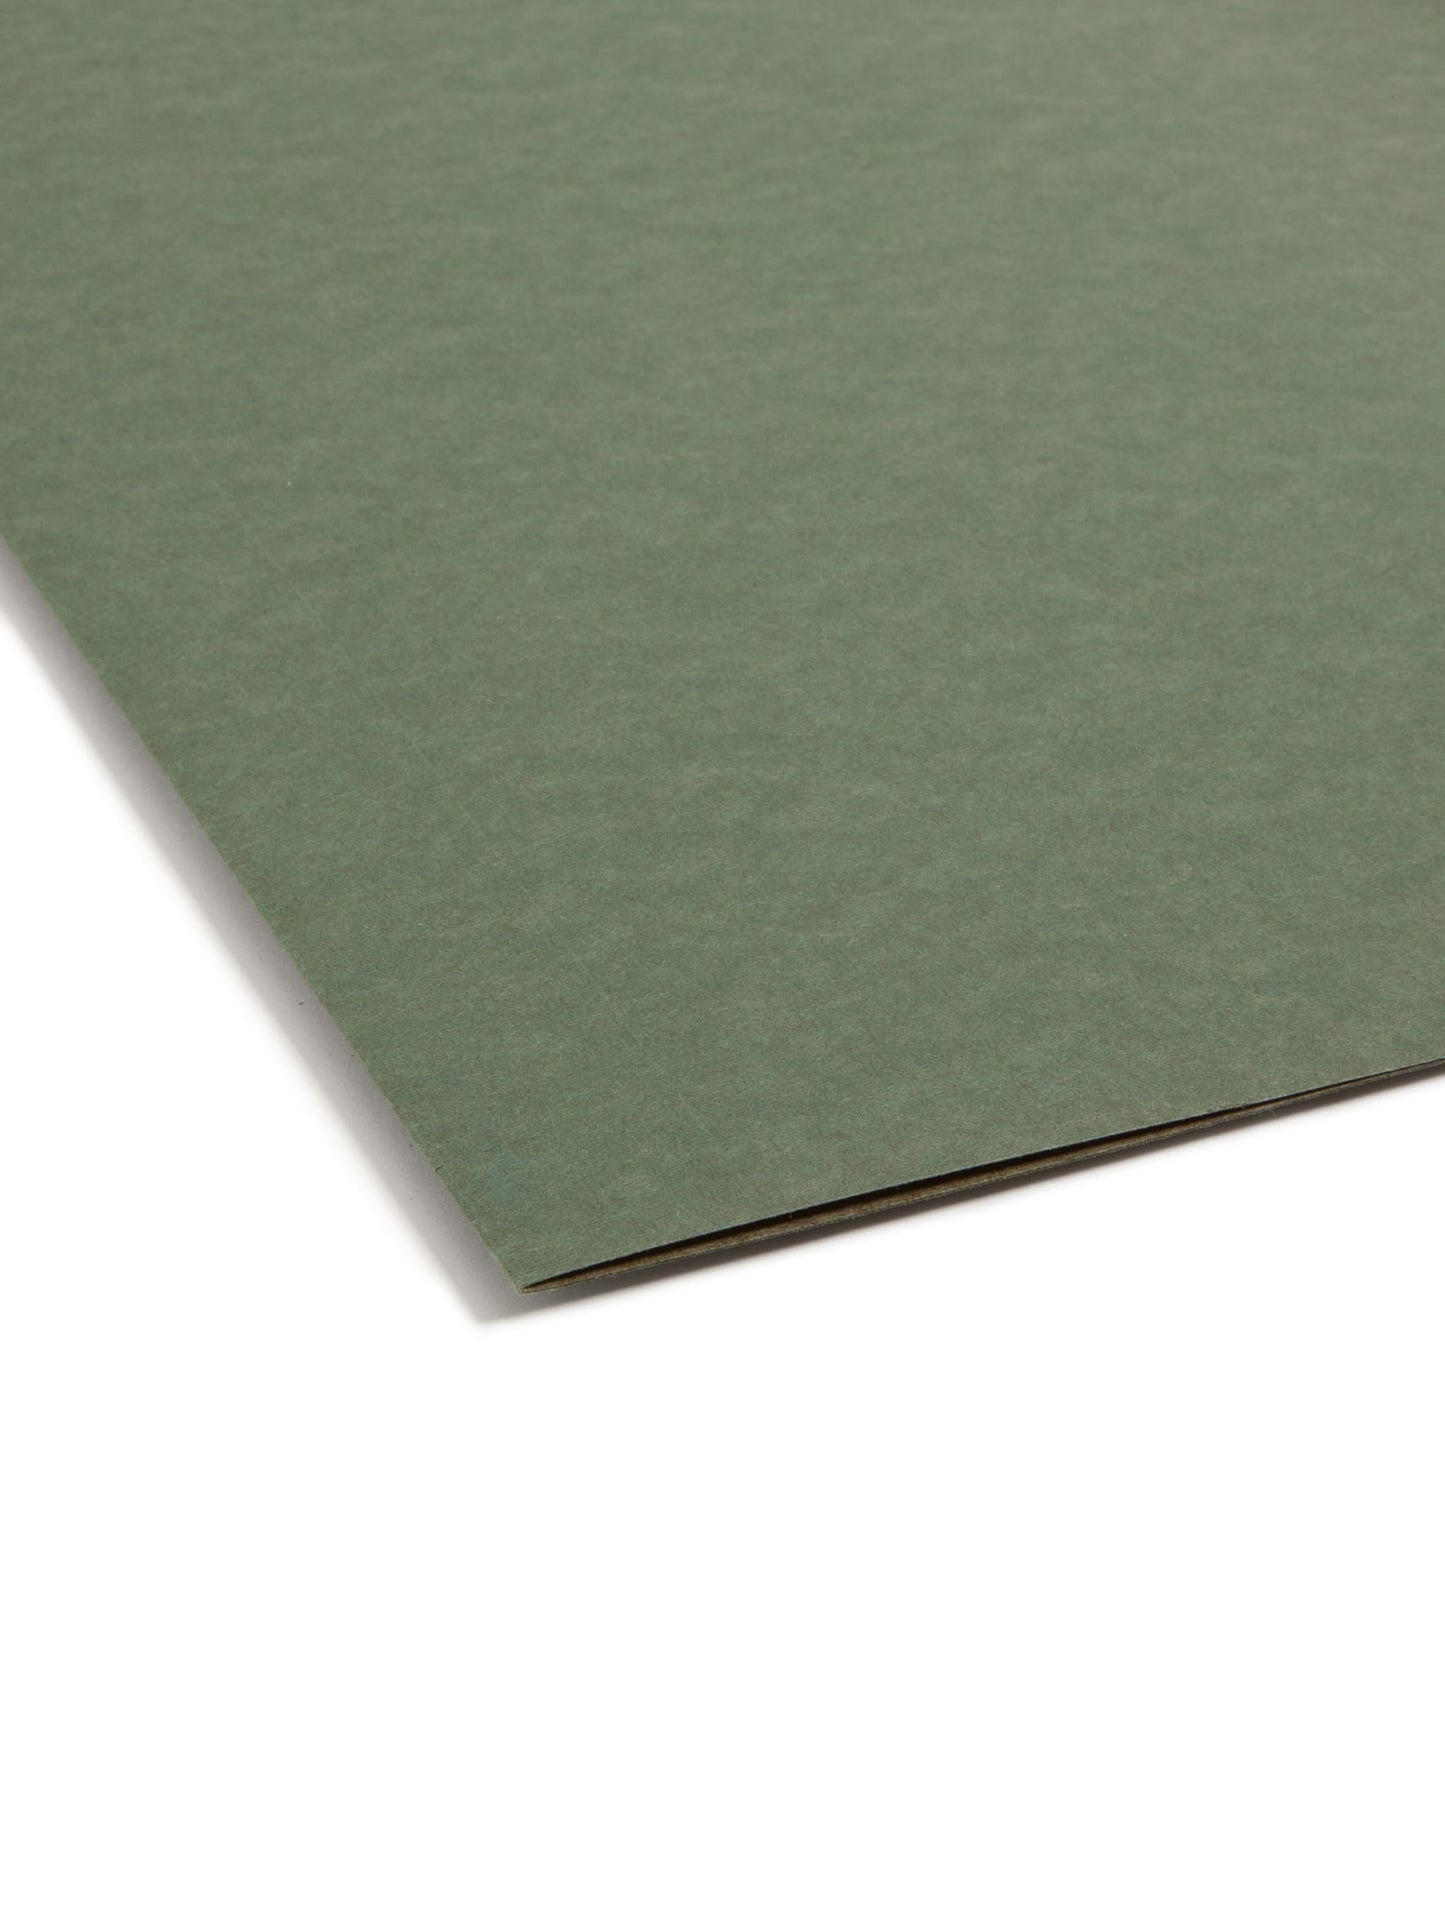 Hanging Box Bottom File Folders, 2 inch Expansion, Standard Green Color, Letter Size, Set of 25, 086486642590